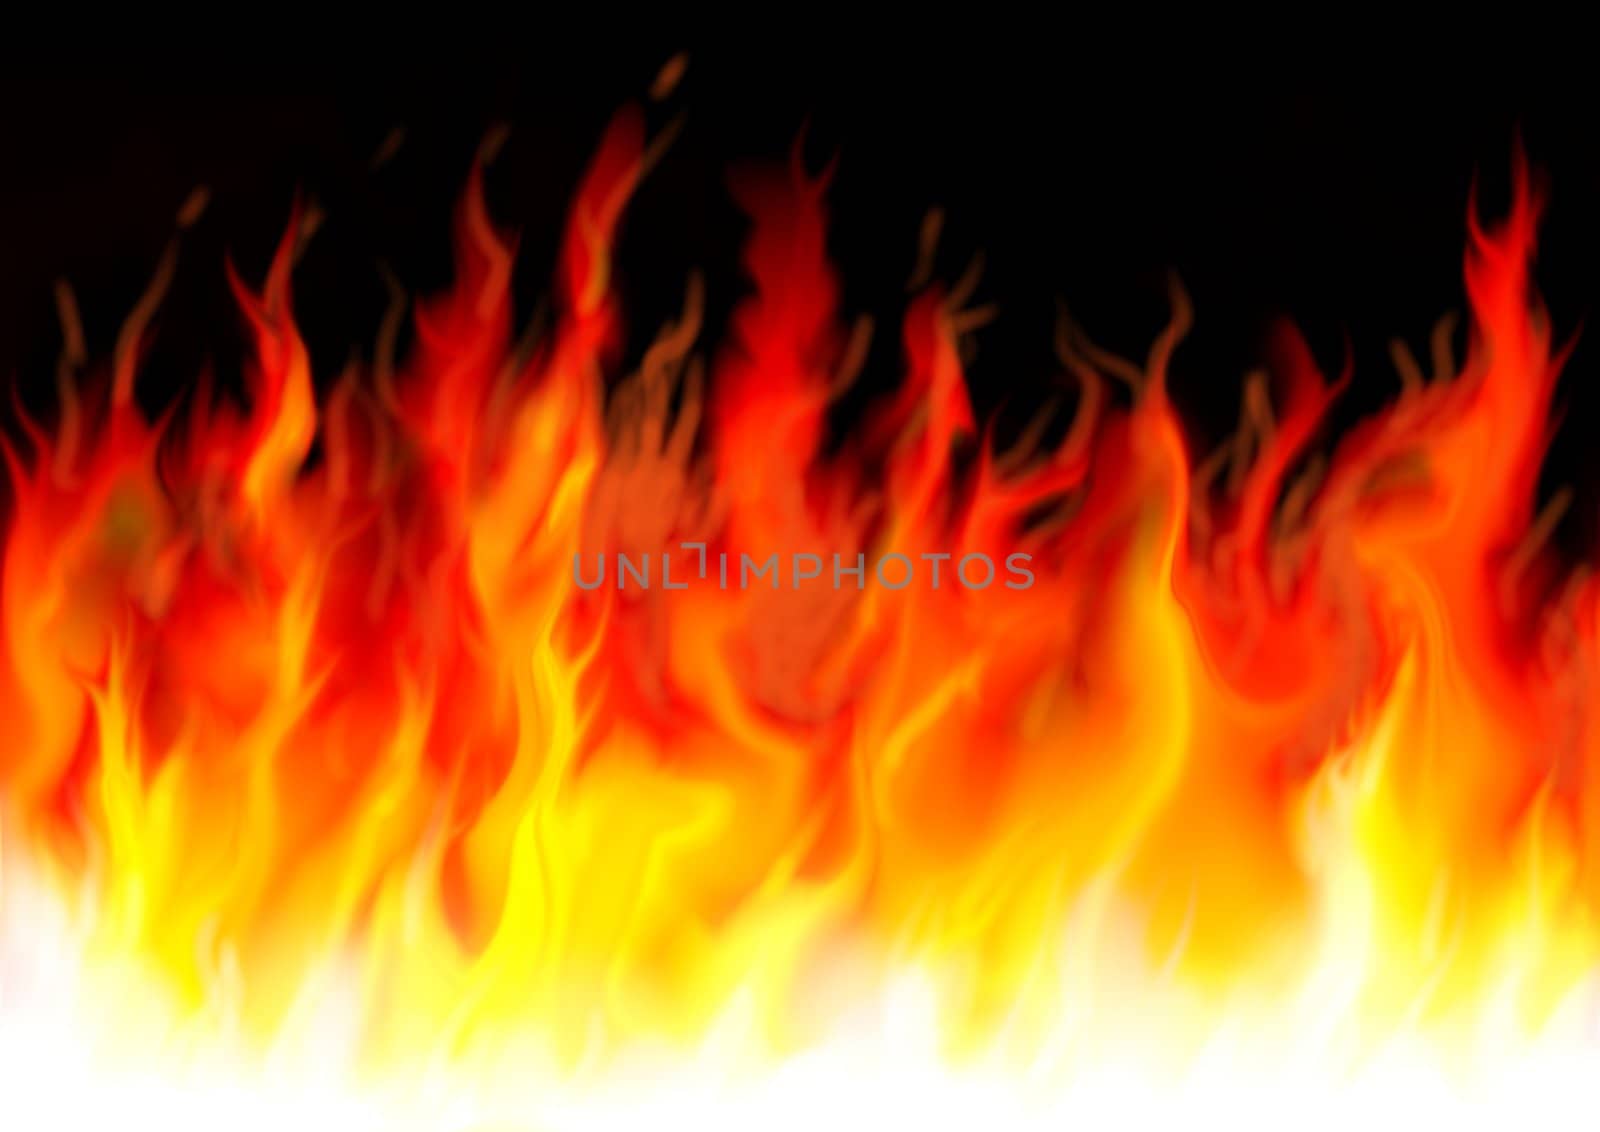 representing on black background dangerous flames illustration